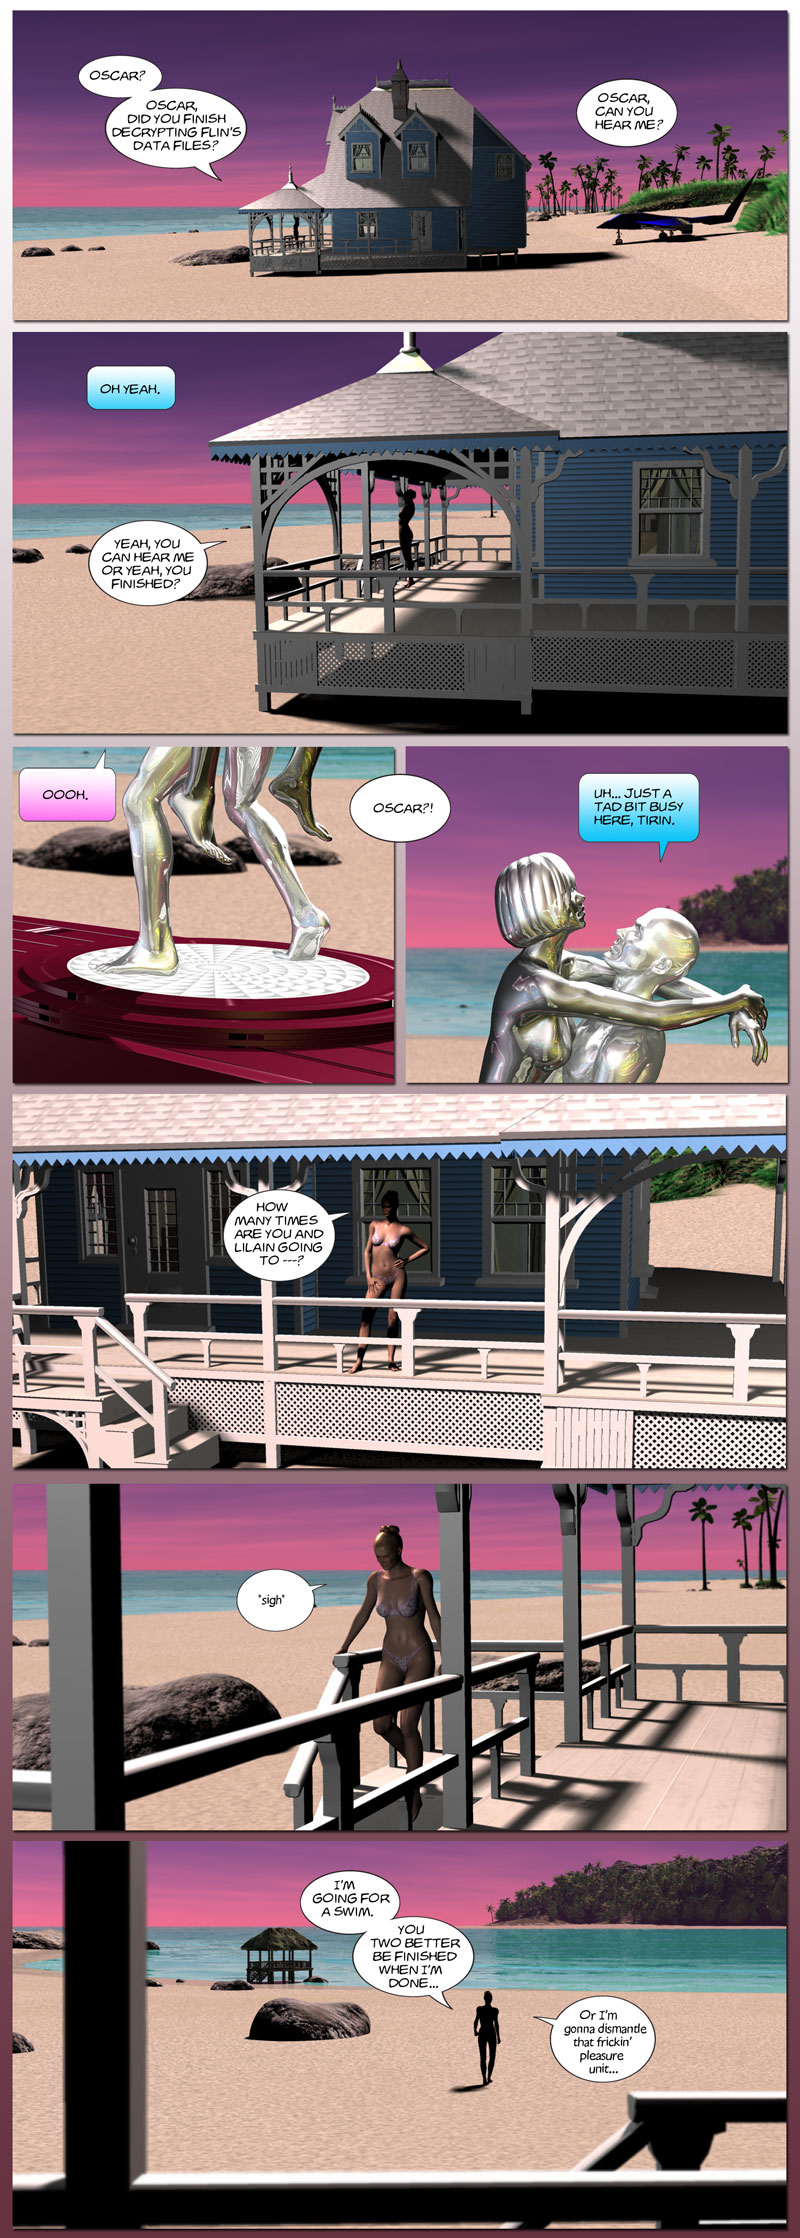 Chapter 6, page 2 – Tirin’s beach house and Oscar’s new Lillain